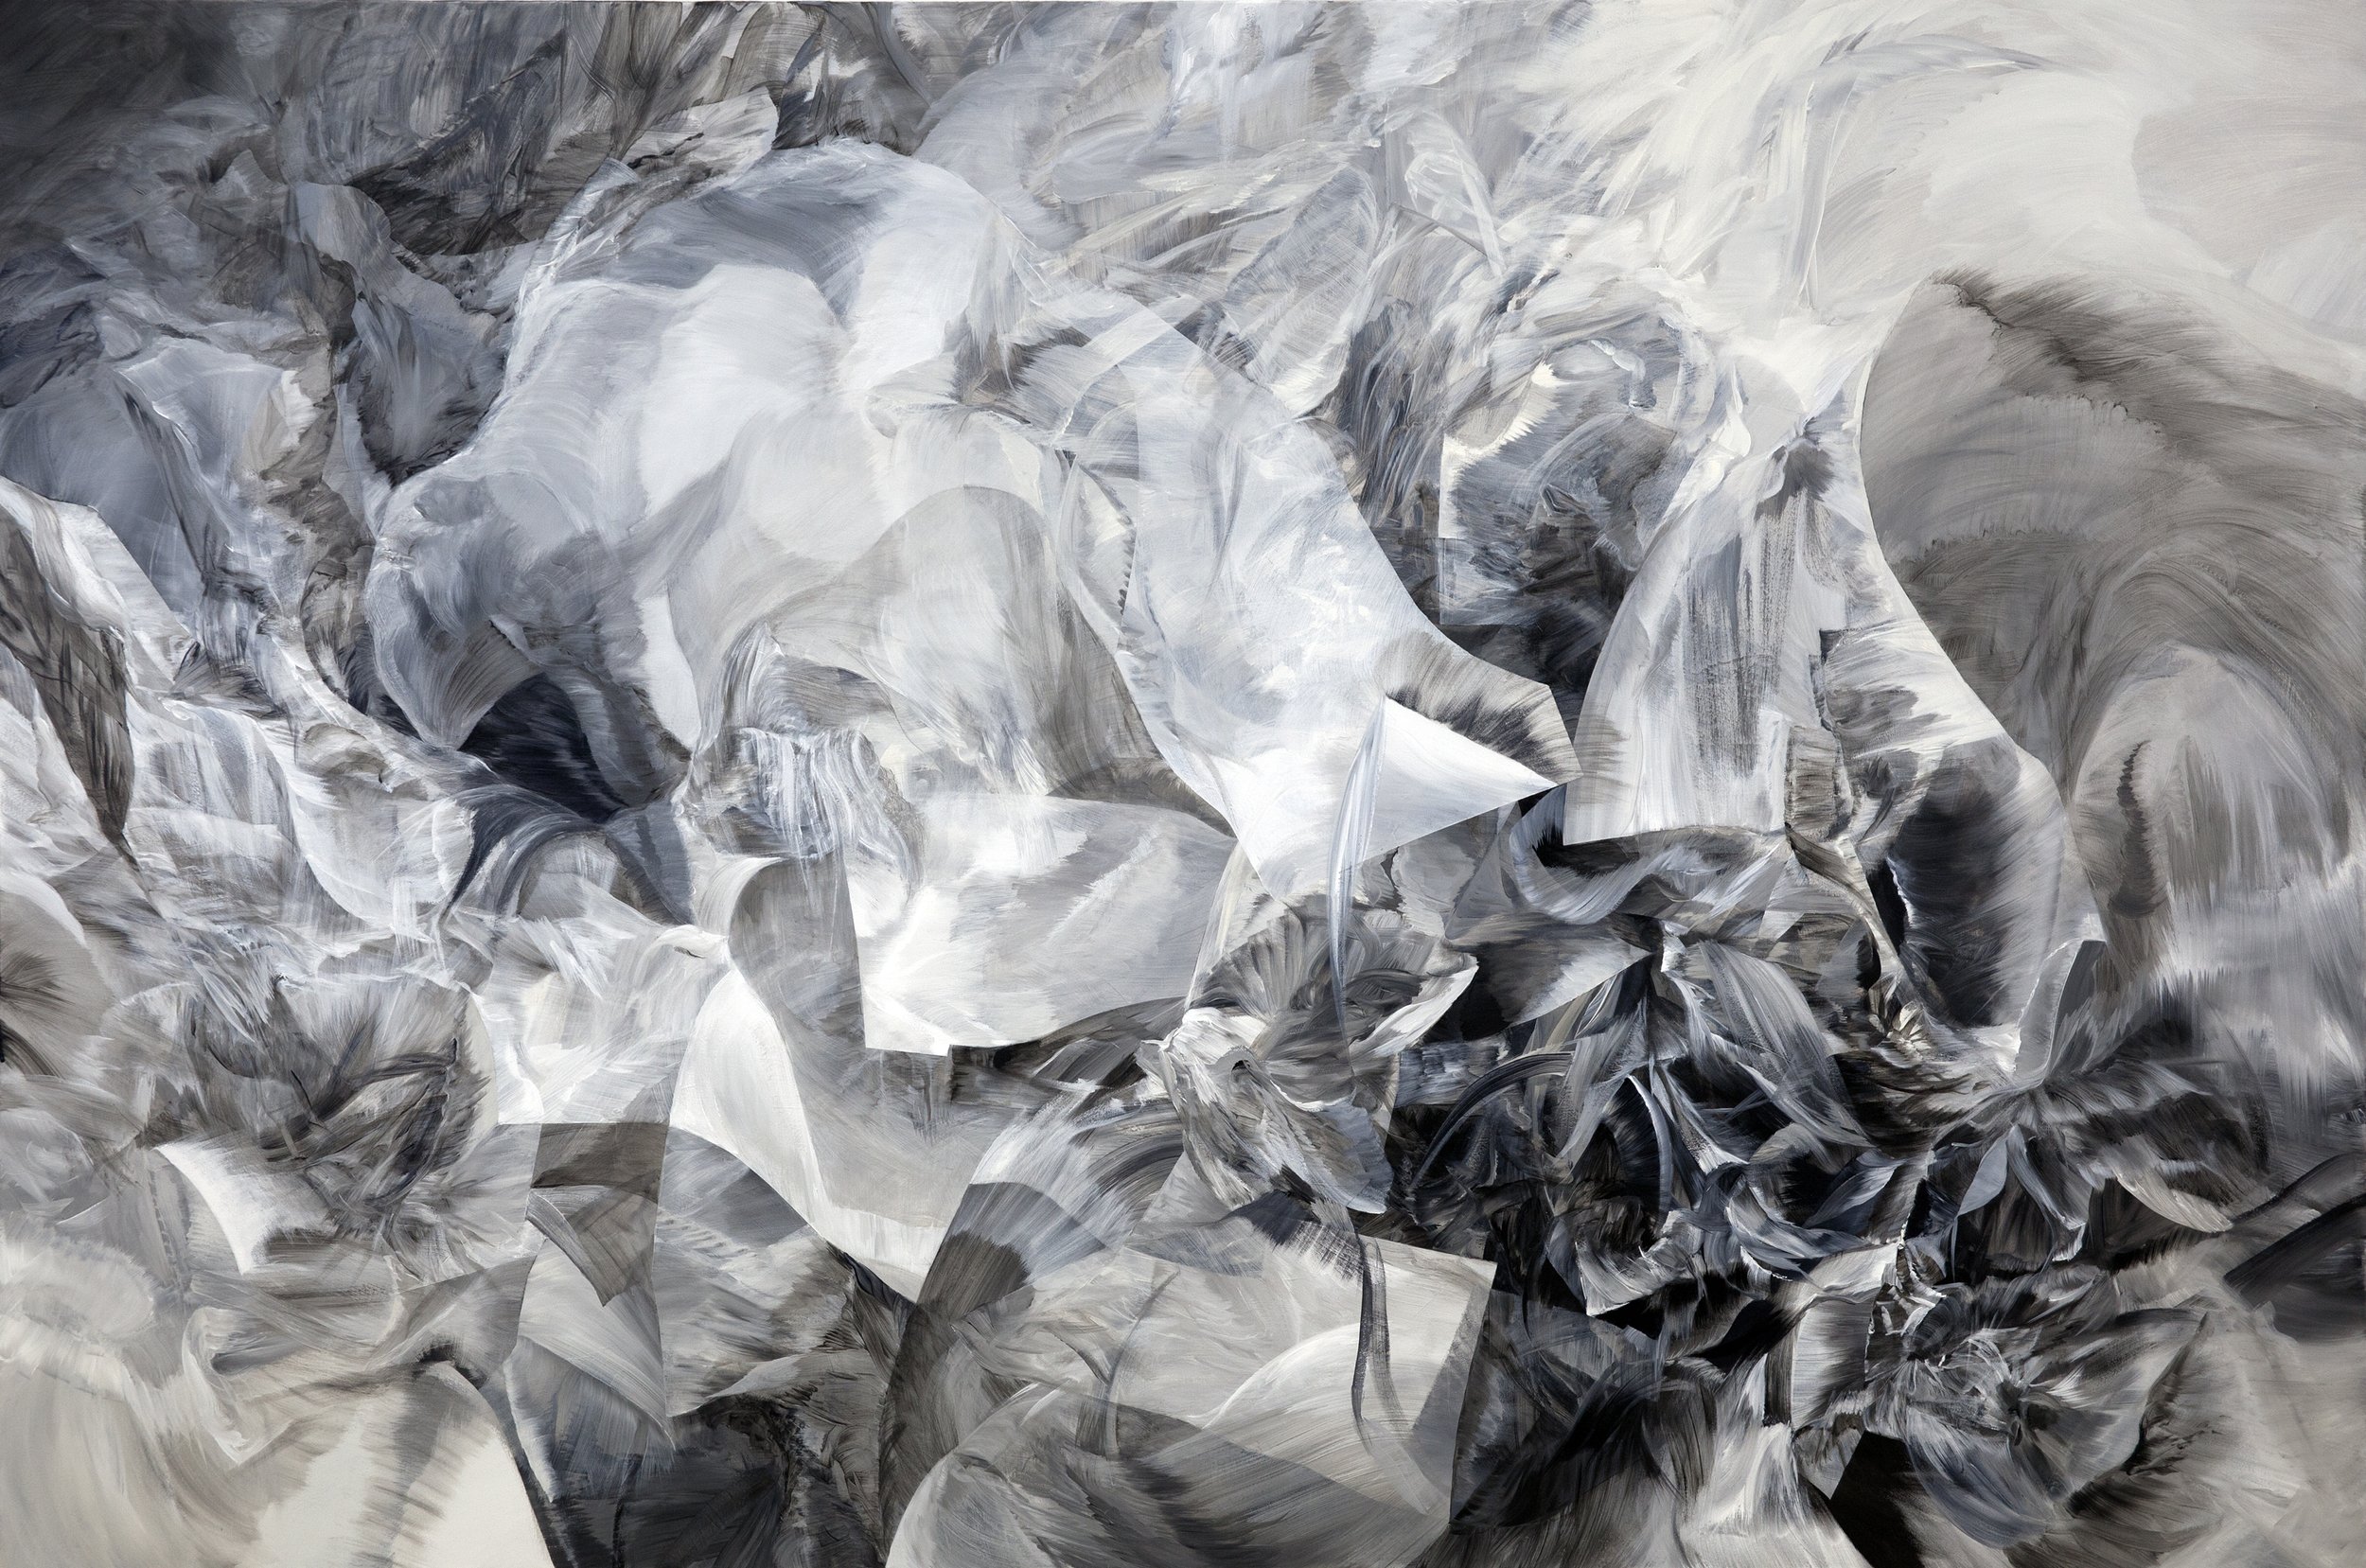  Tensile Shores  acrylic on canvas  72” x 108” 